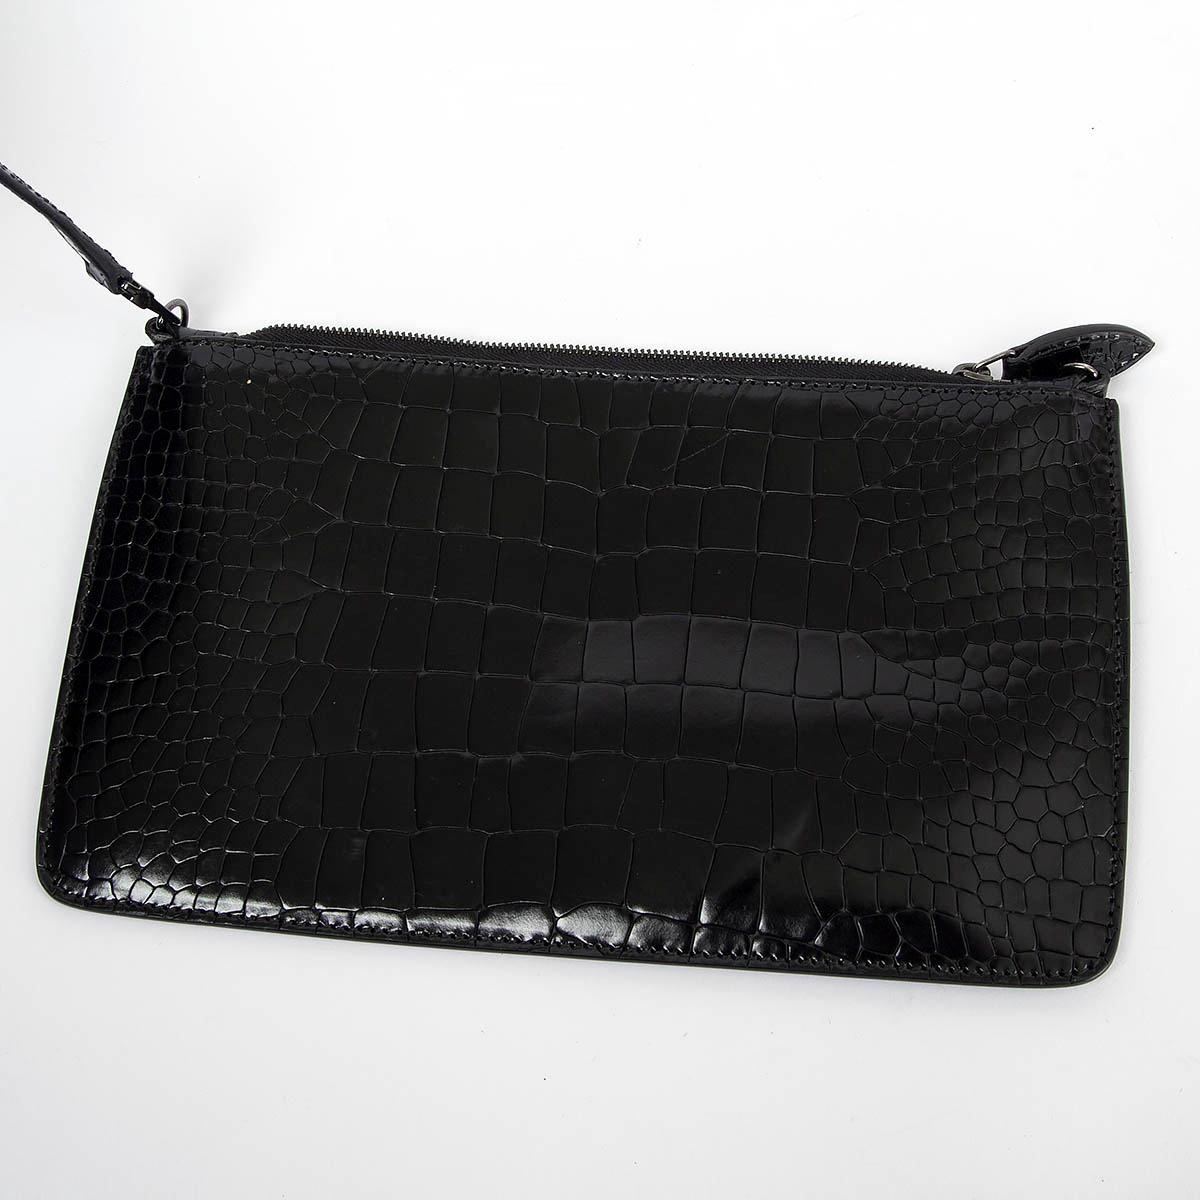 ALAIA black leather SHINY CROCODILE EMBOSSED VIENNE Tote Bag 3